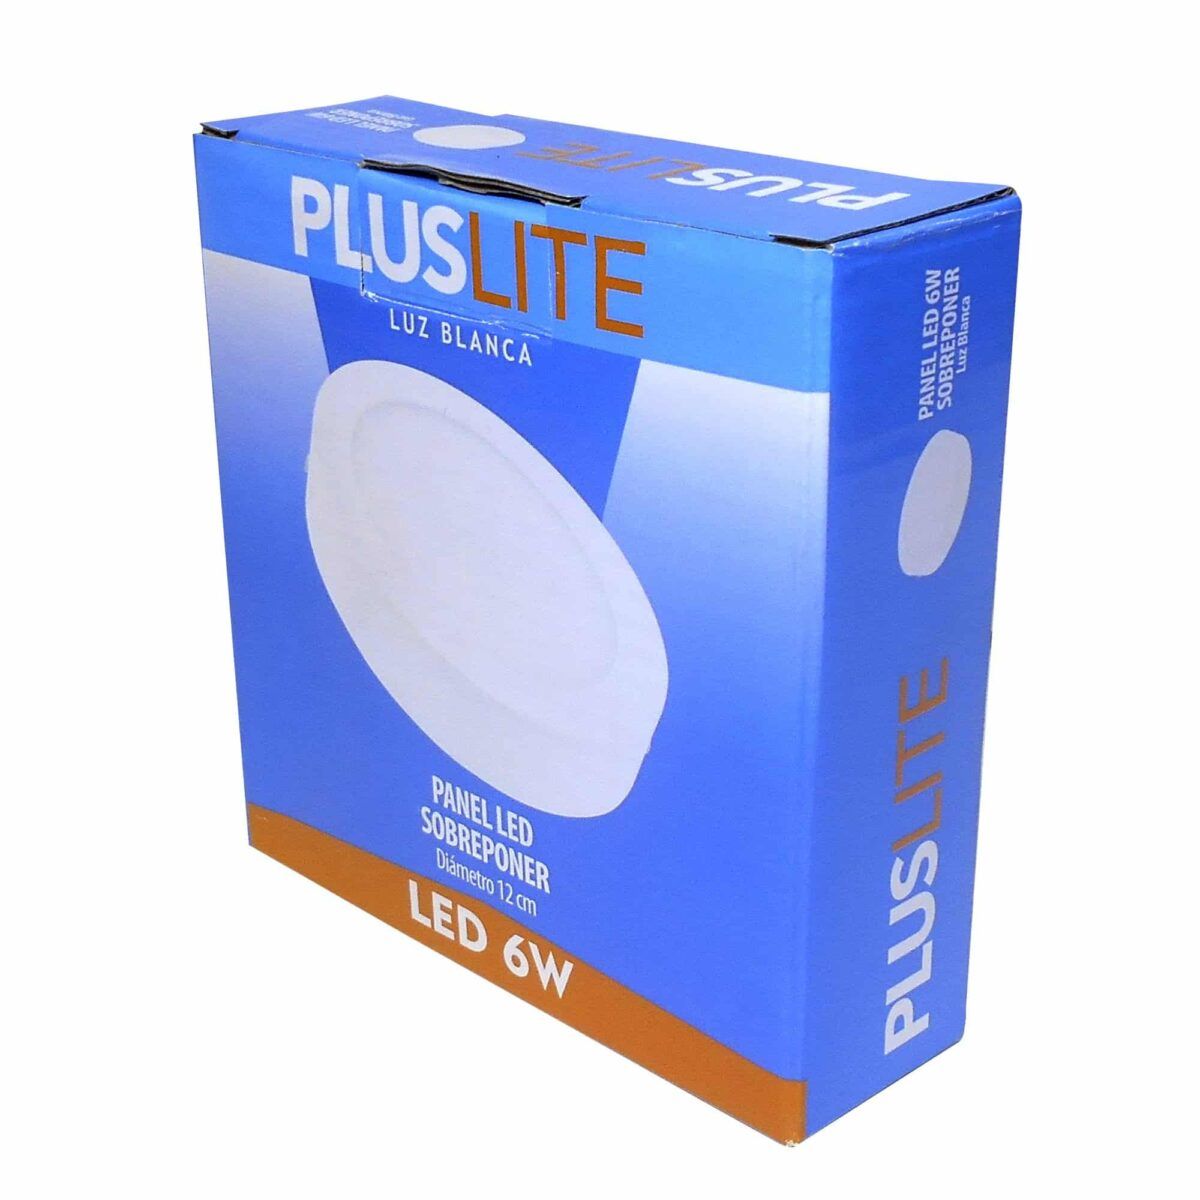 Panel LED 6W Pluslite Sobreponer Redondo Luz Blanca 12cm 1289 4